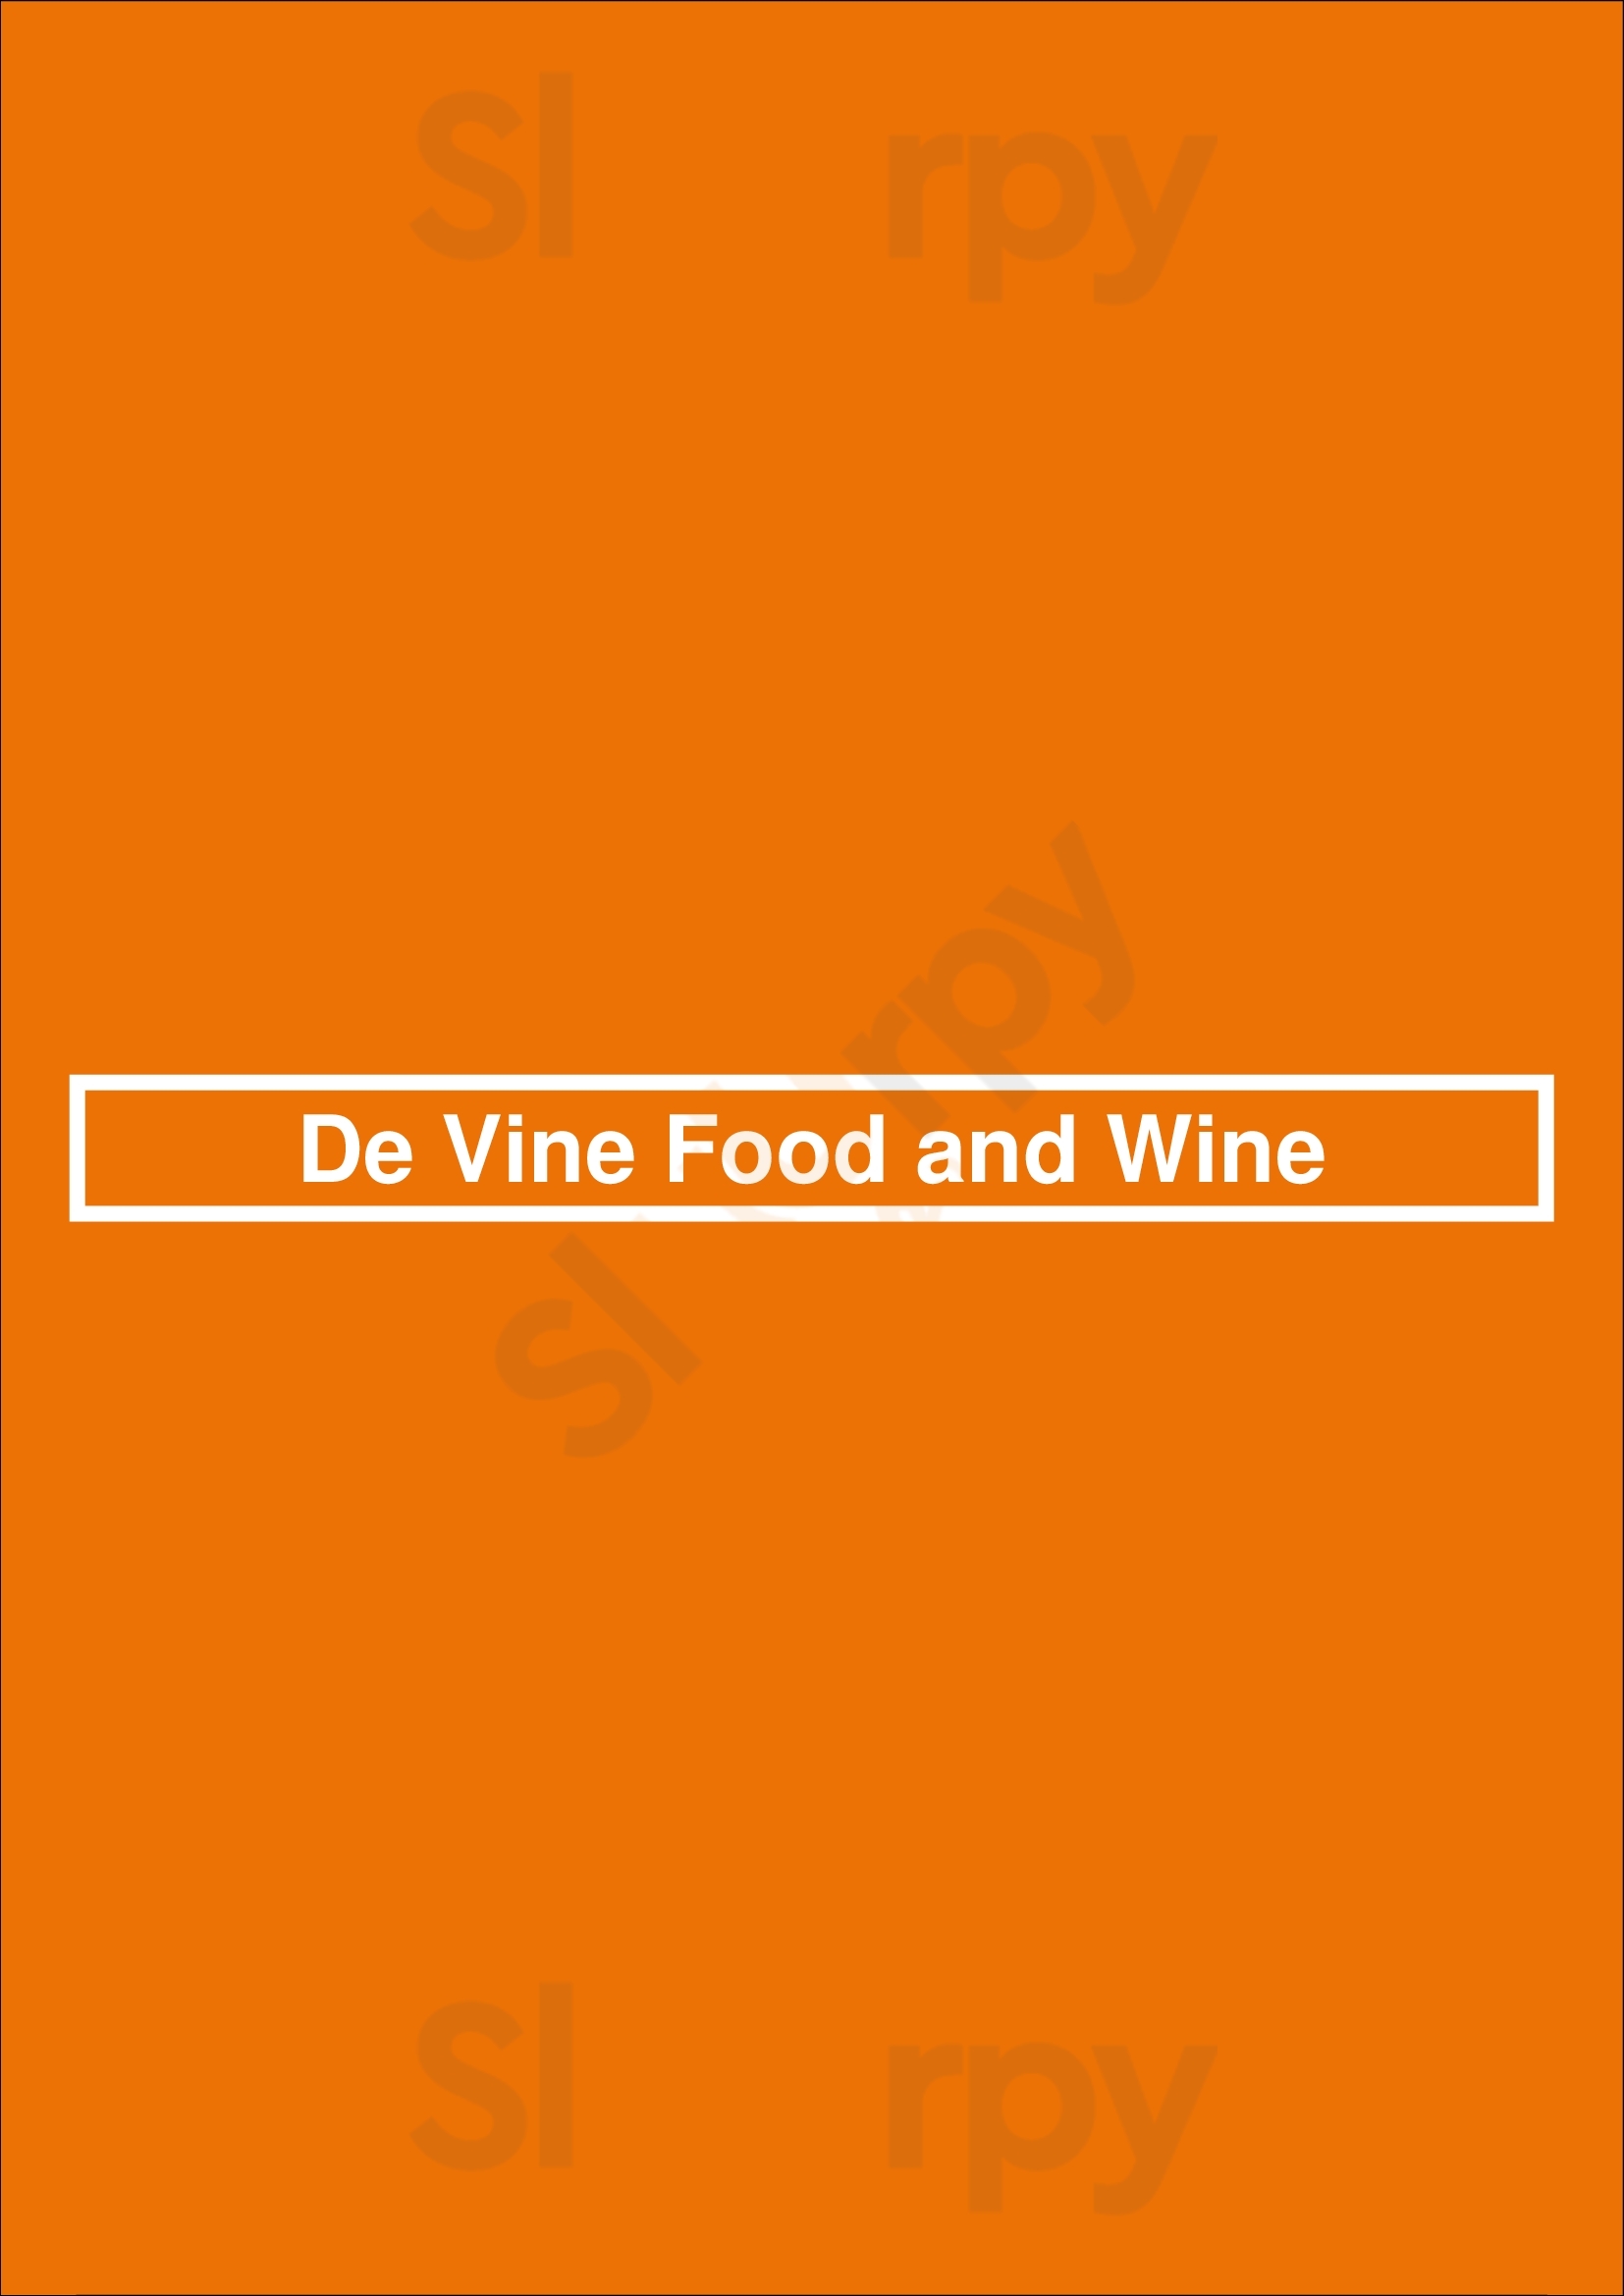 Devine Food And Wine Sydney Menu - 1